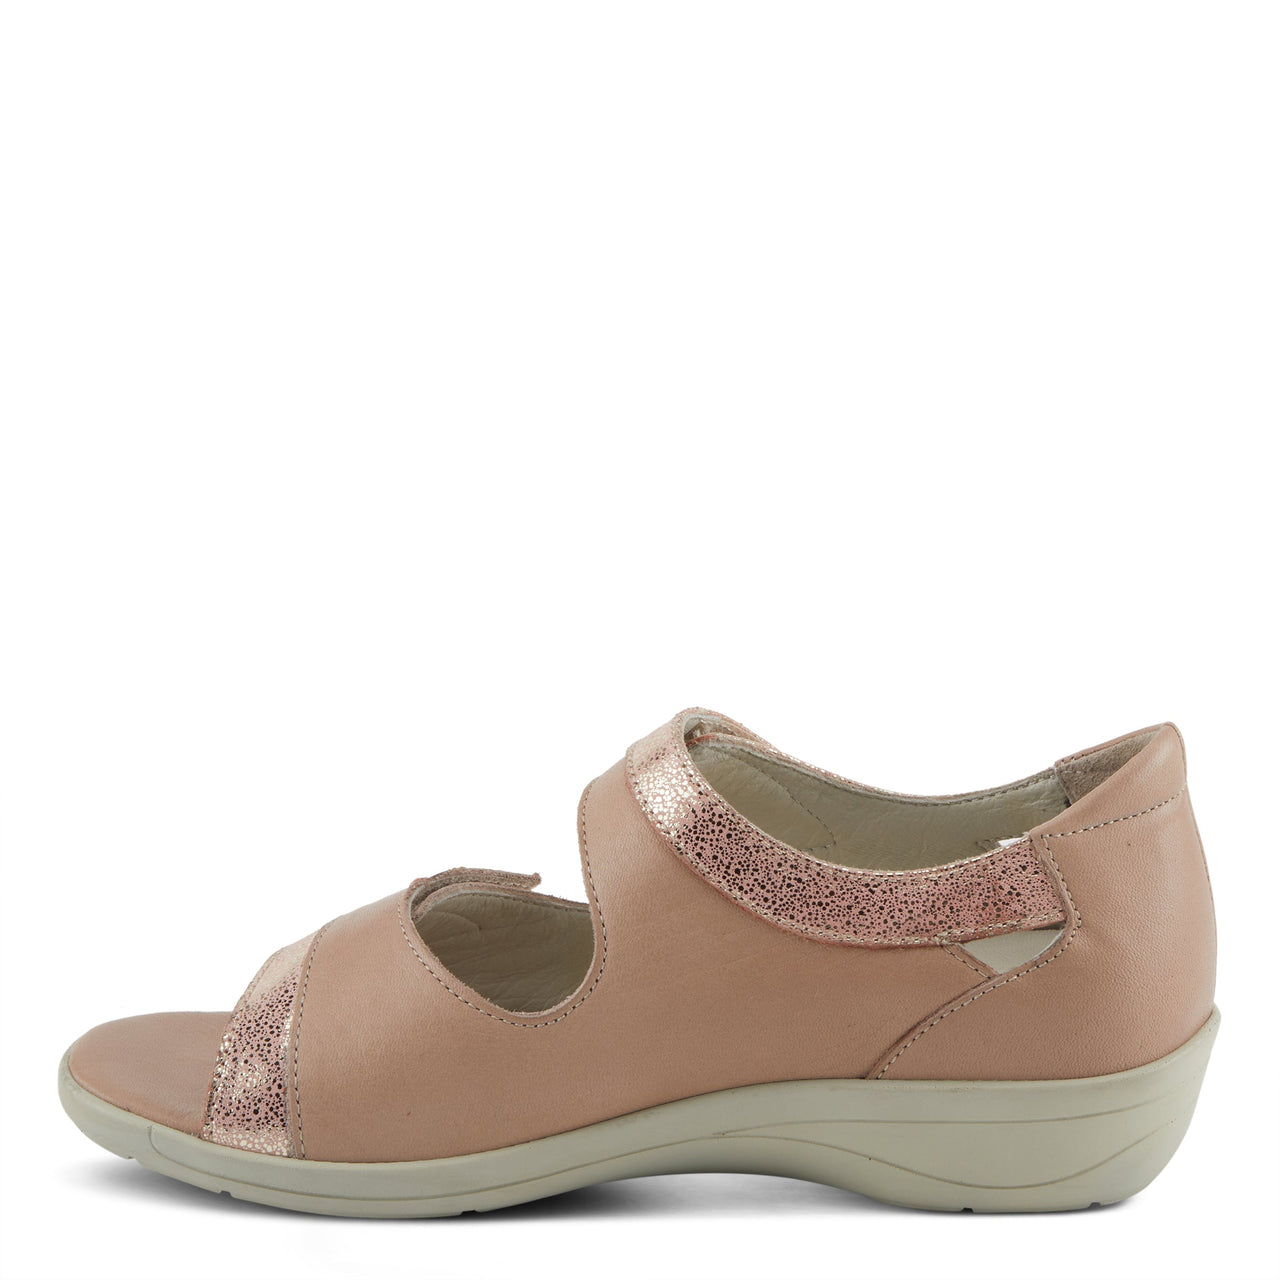 Spring Step Shoes Flexus Jordimarie Sandals